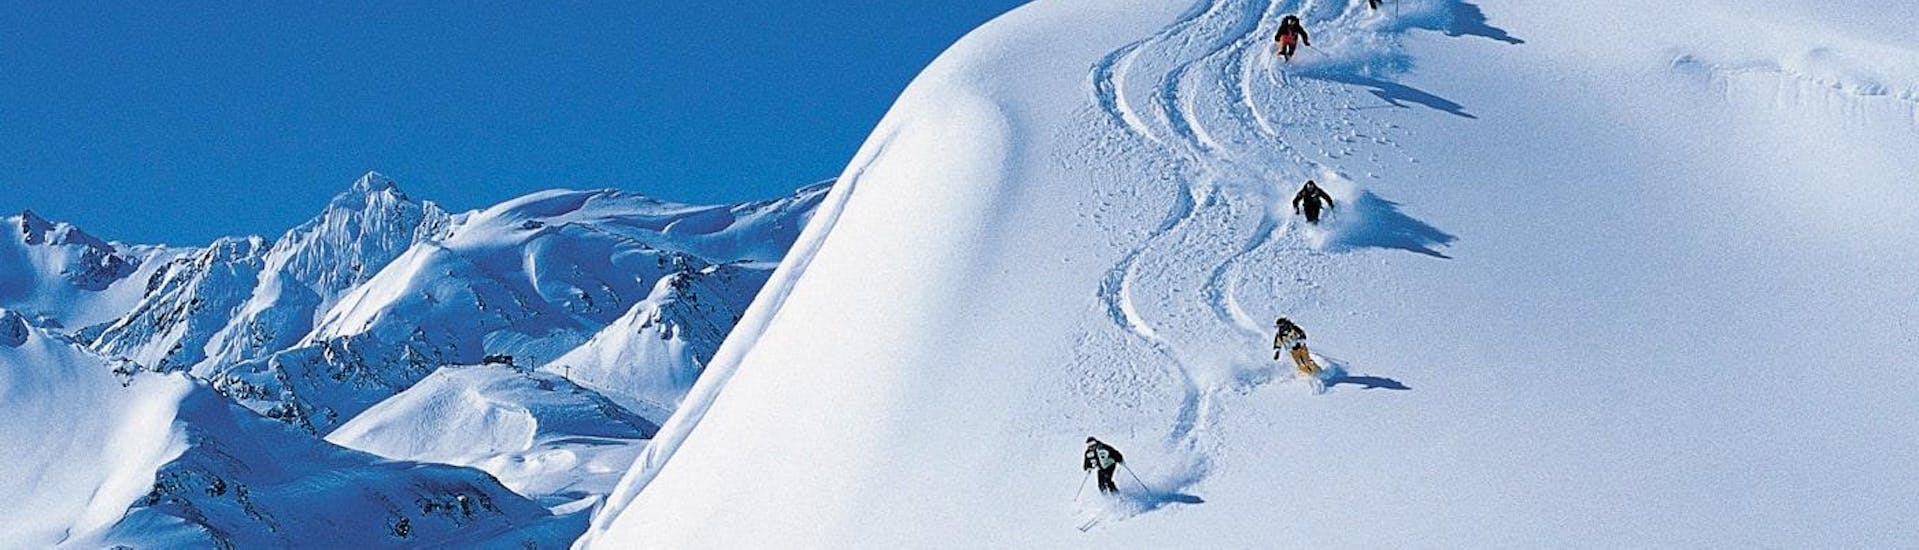 Lezioni private di sci per adulti a partire da 10 anni per tutti i livelli.